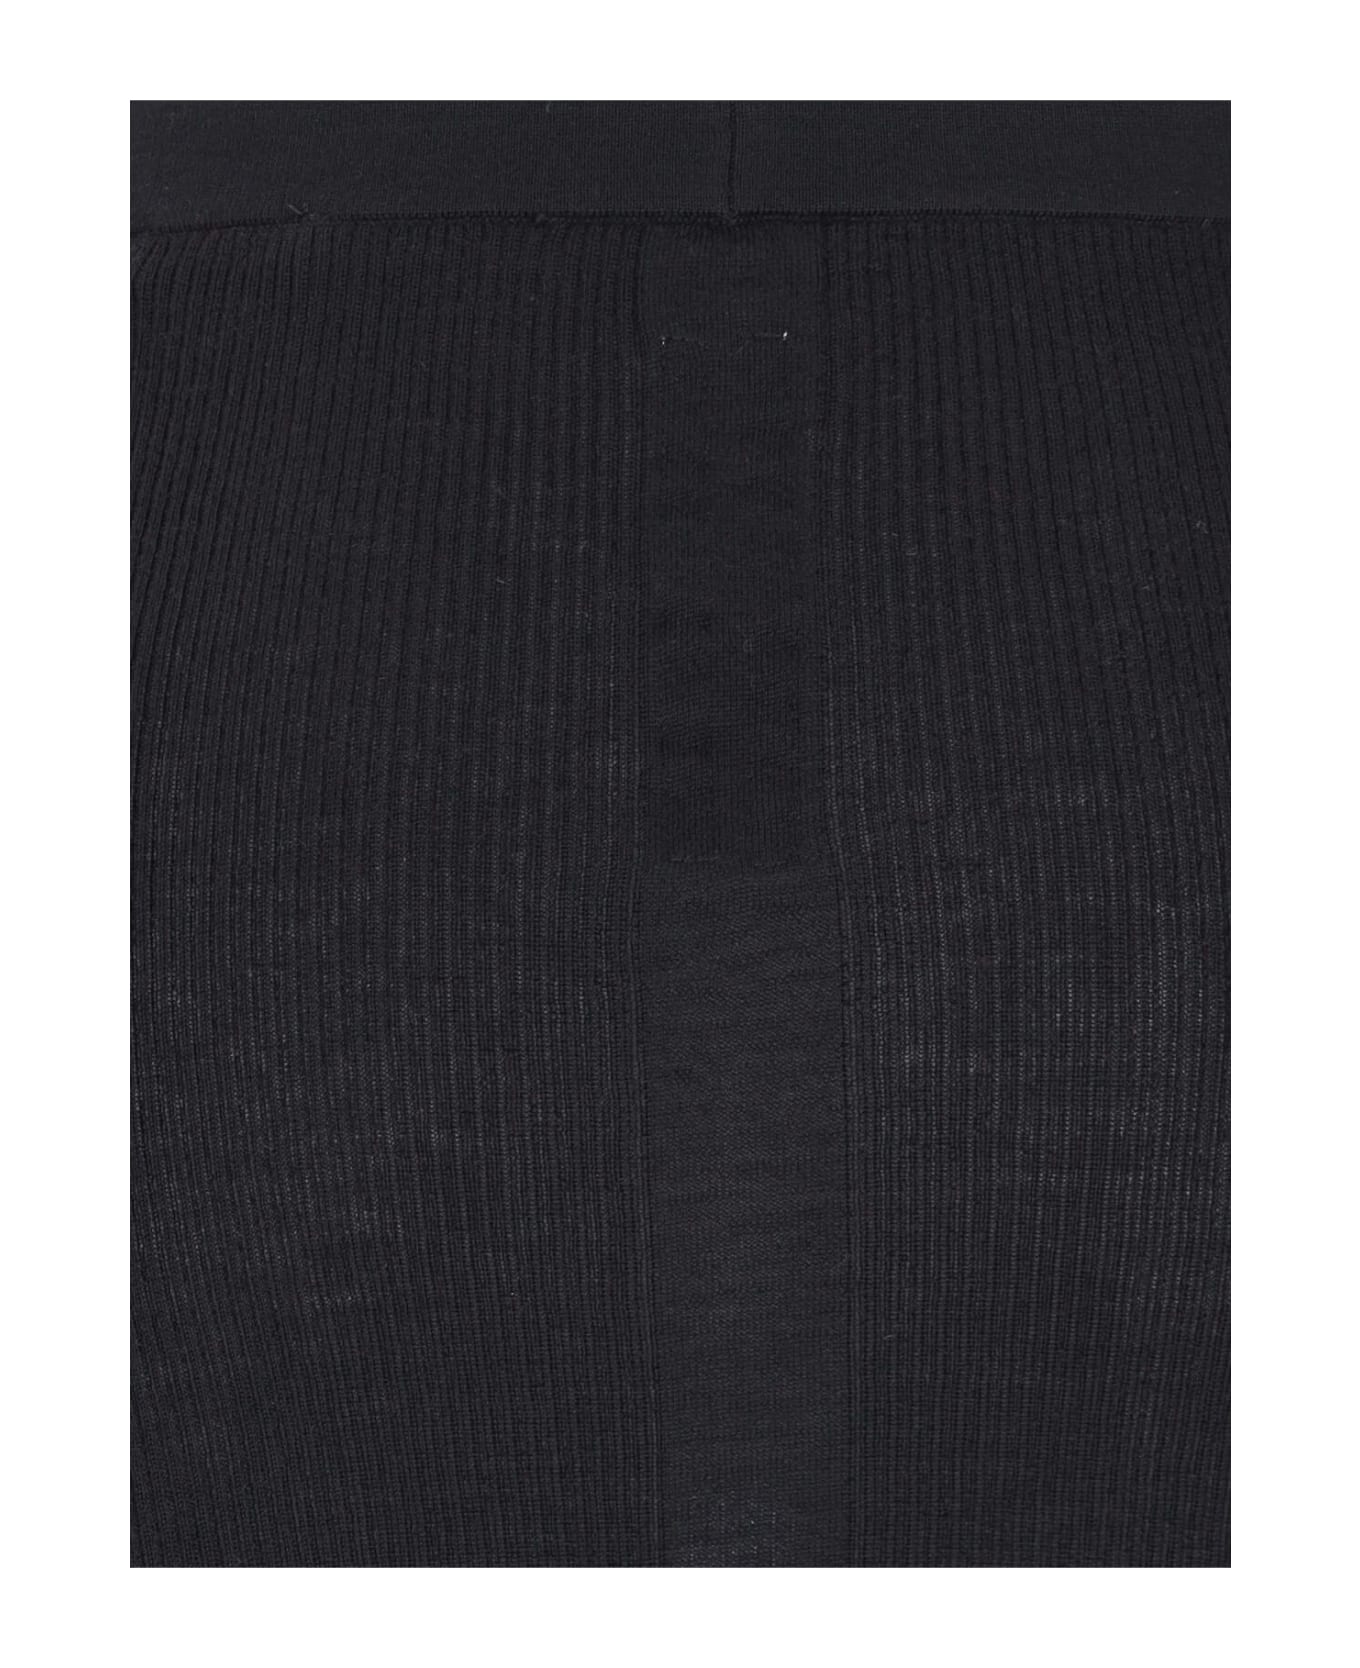 Rick Owens Maxi Wool Skirt - Black  